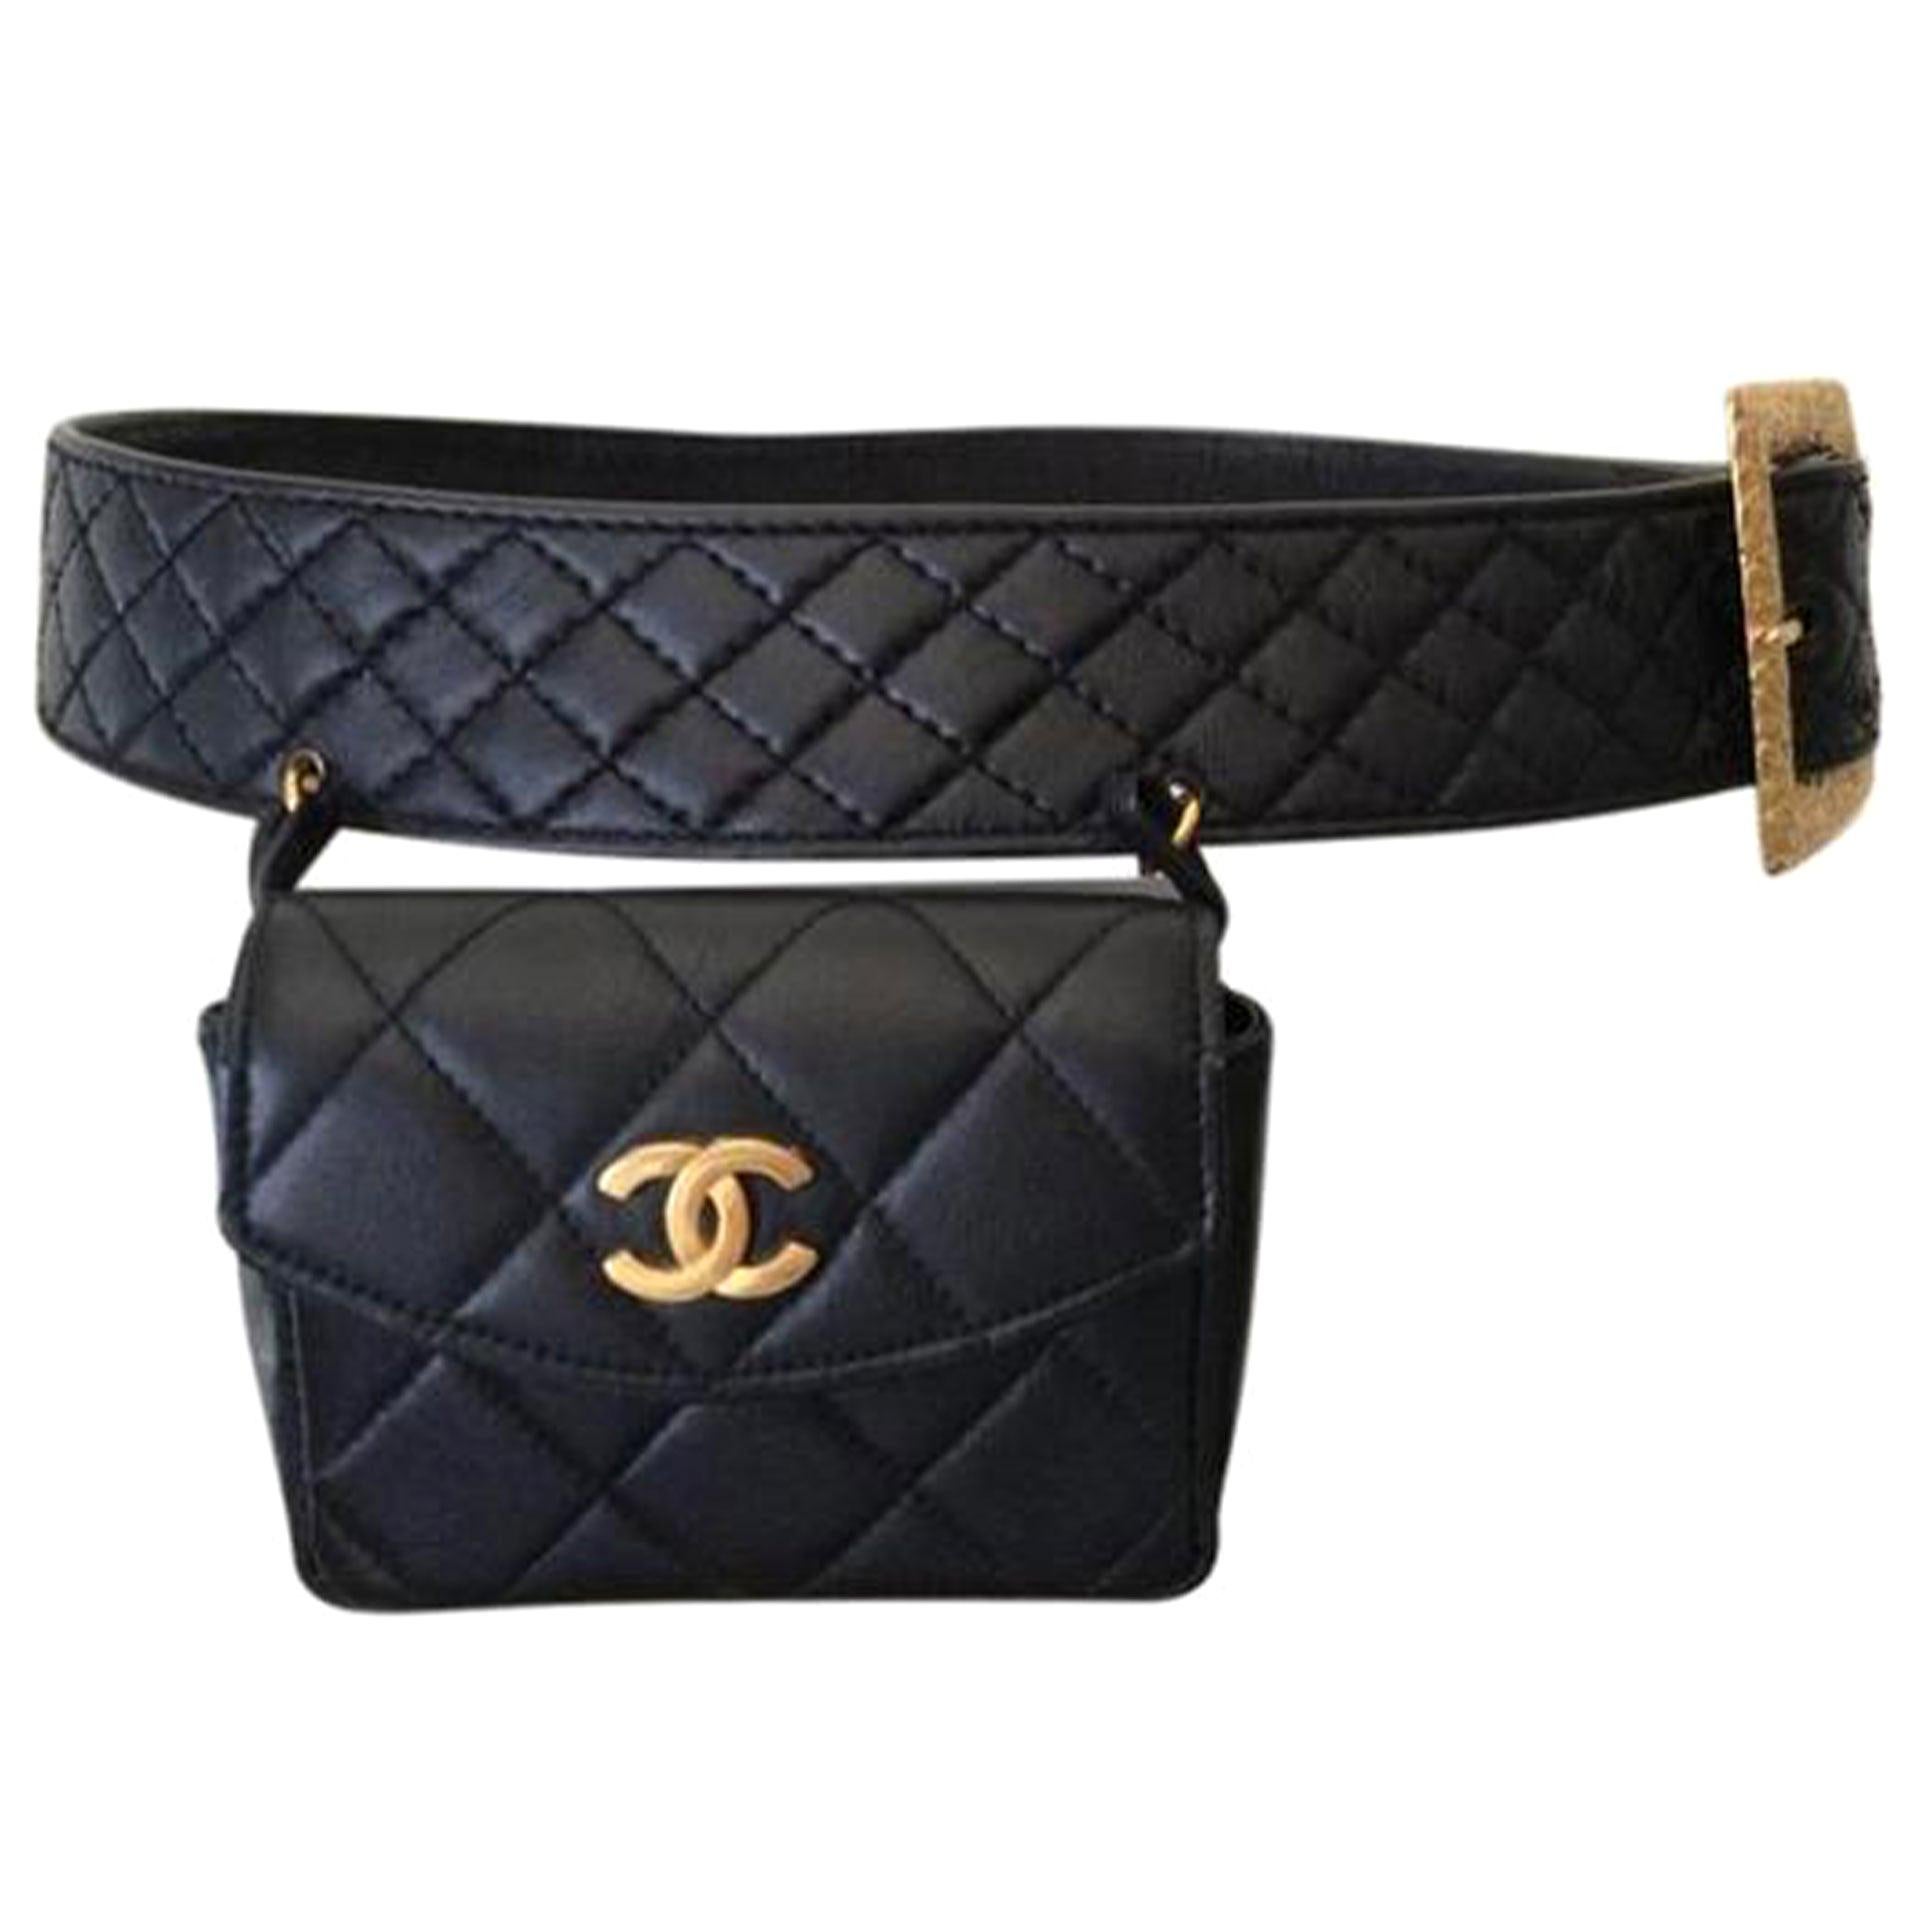 Chanel Belt Bag Rare Vintage 90s Mini Fanny Pack Waist Black